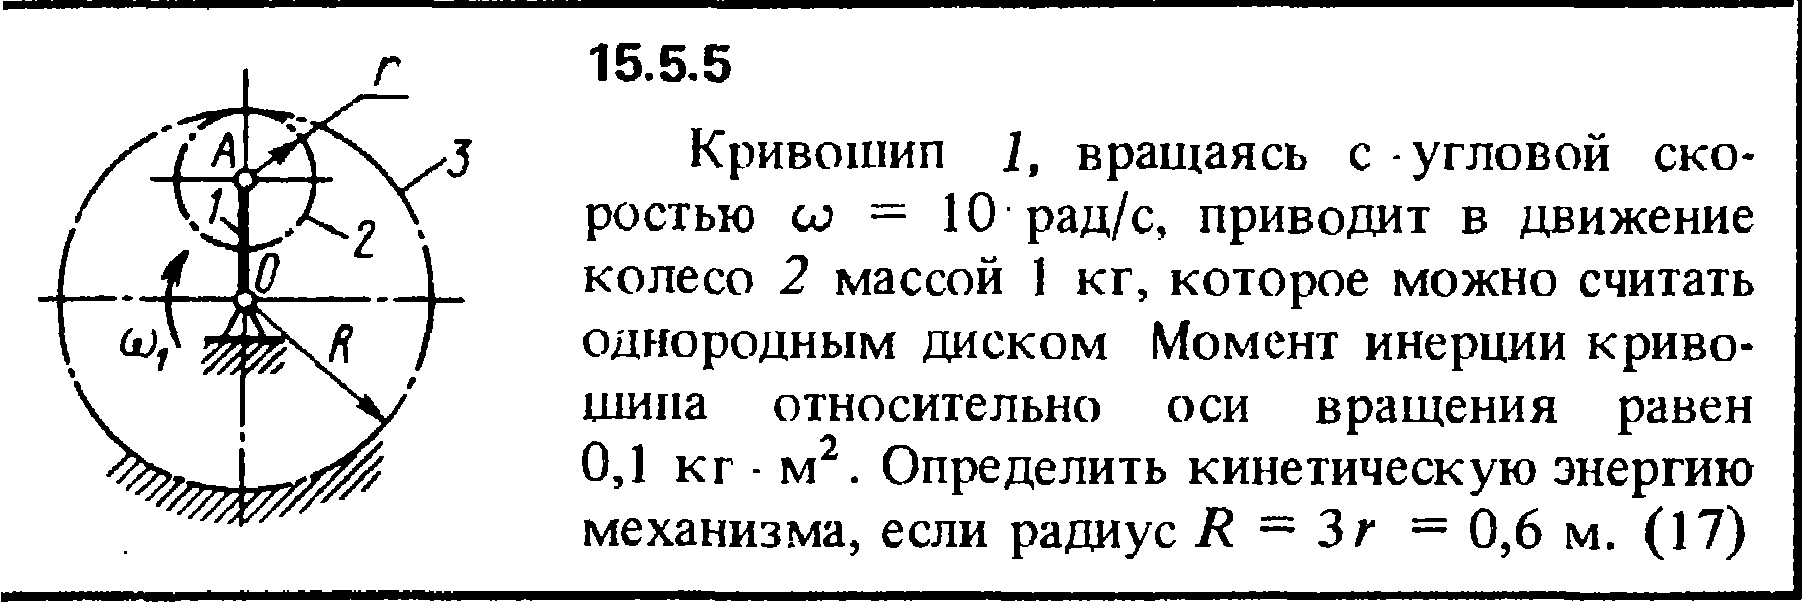 Решение задачи 15.5.5 из сборника Кепе О.Е. 1989 года